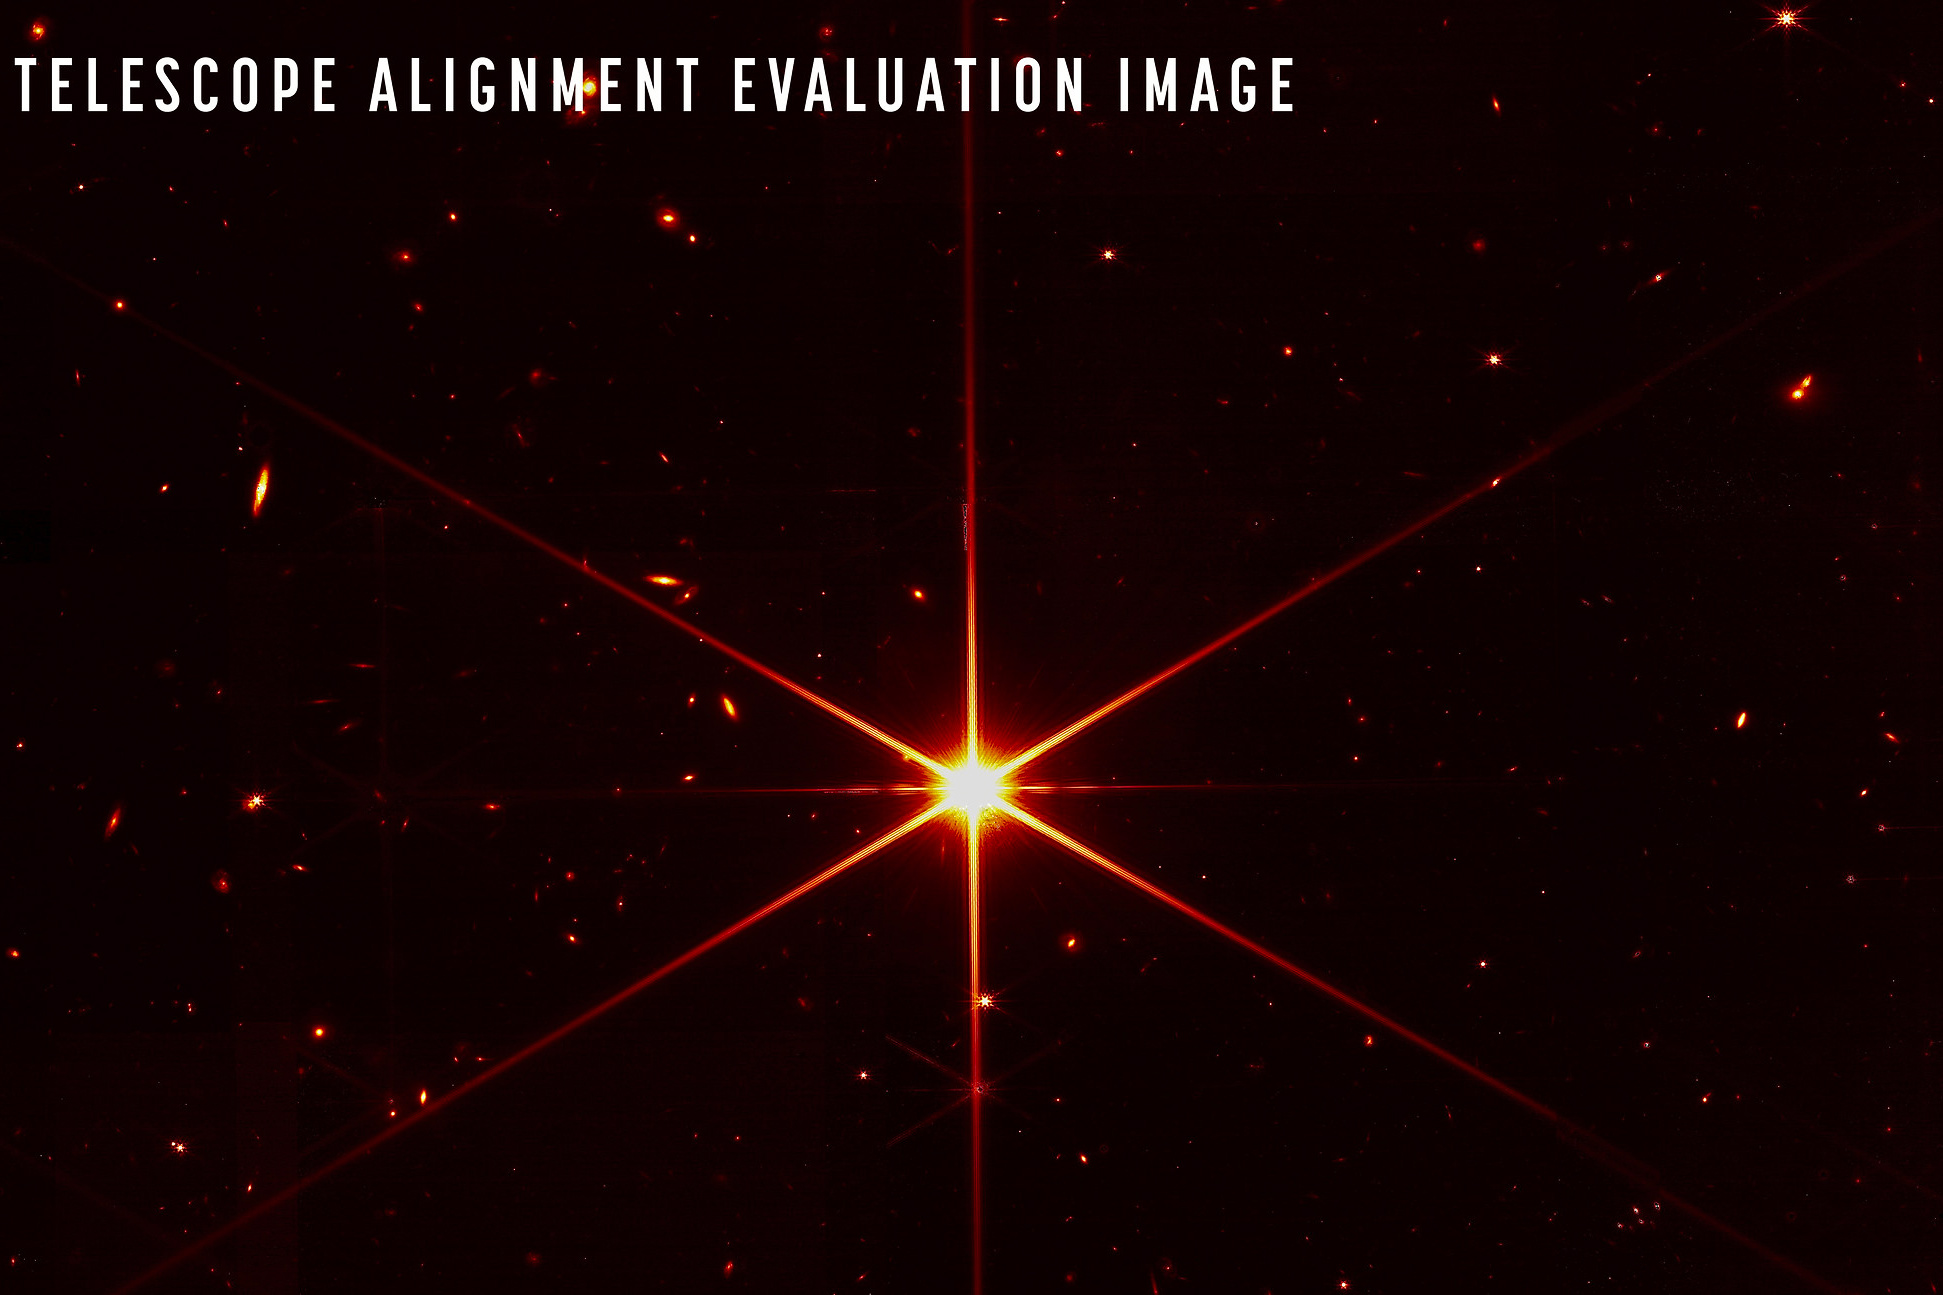 Webb Telescope Alignment ‘Perfect’ Ahead of Debut Images: NASA